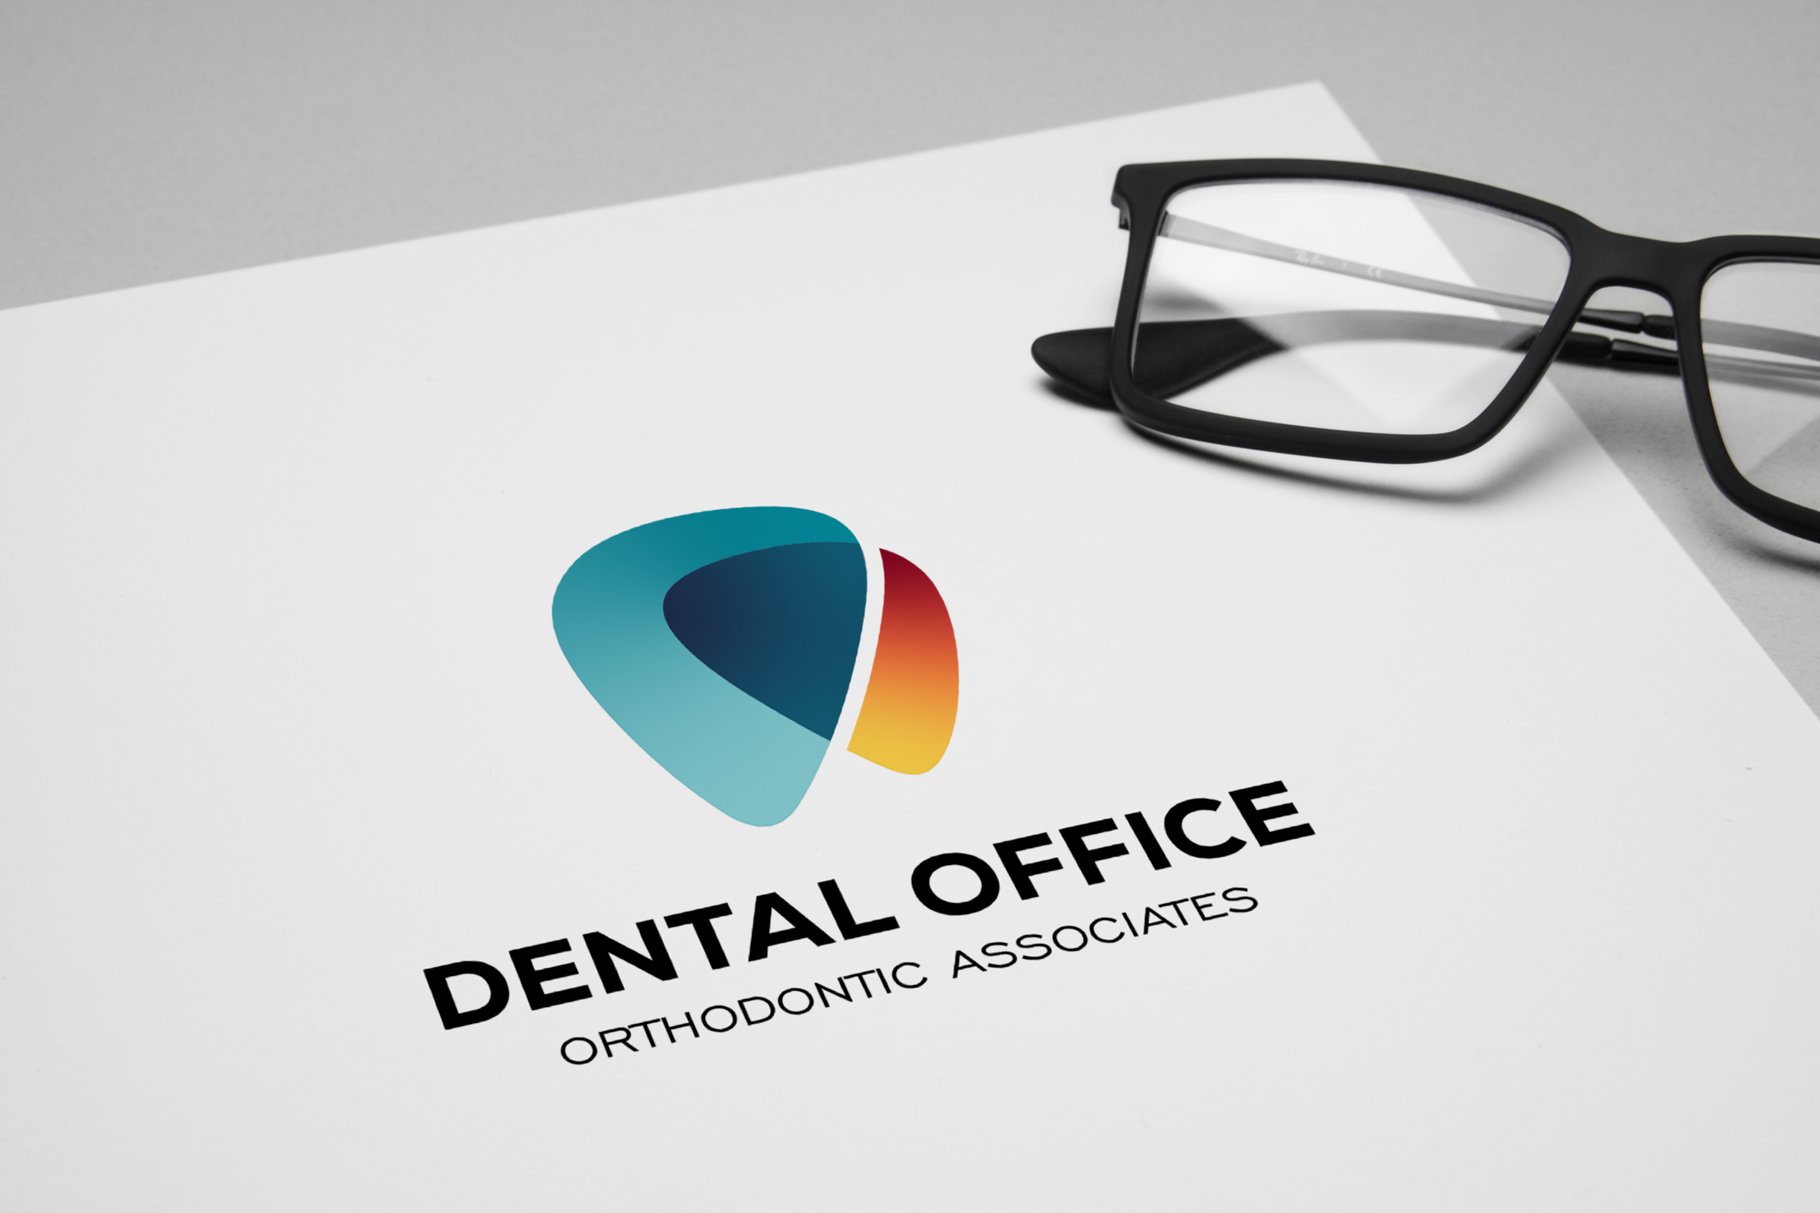 Dental Logo cover image.